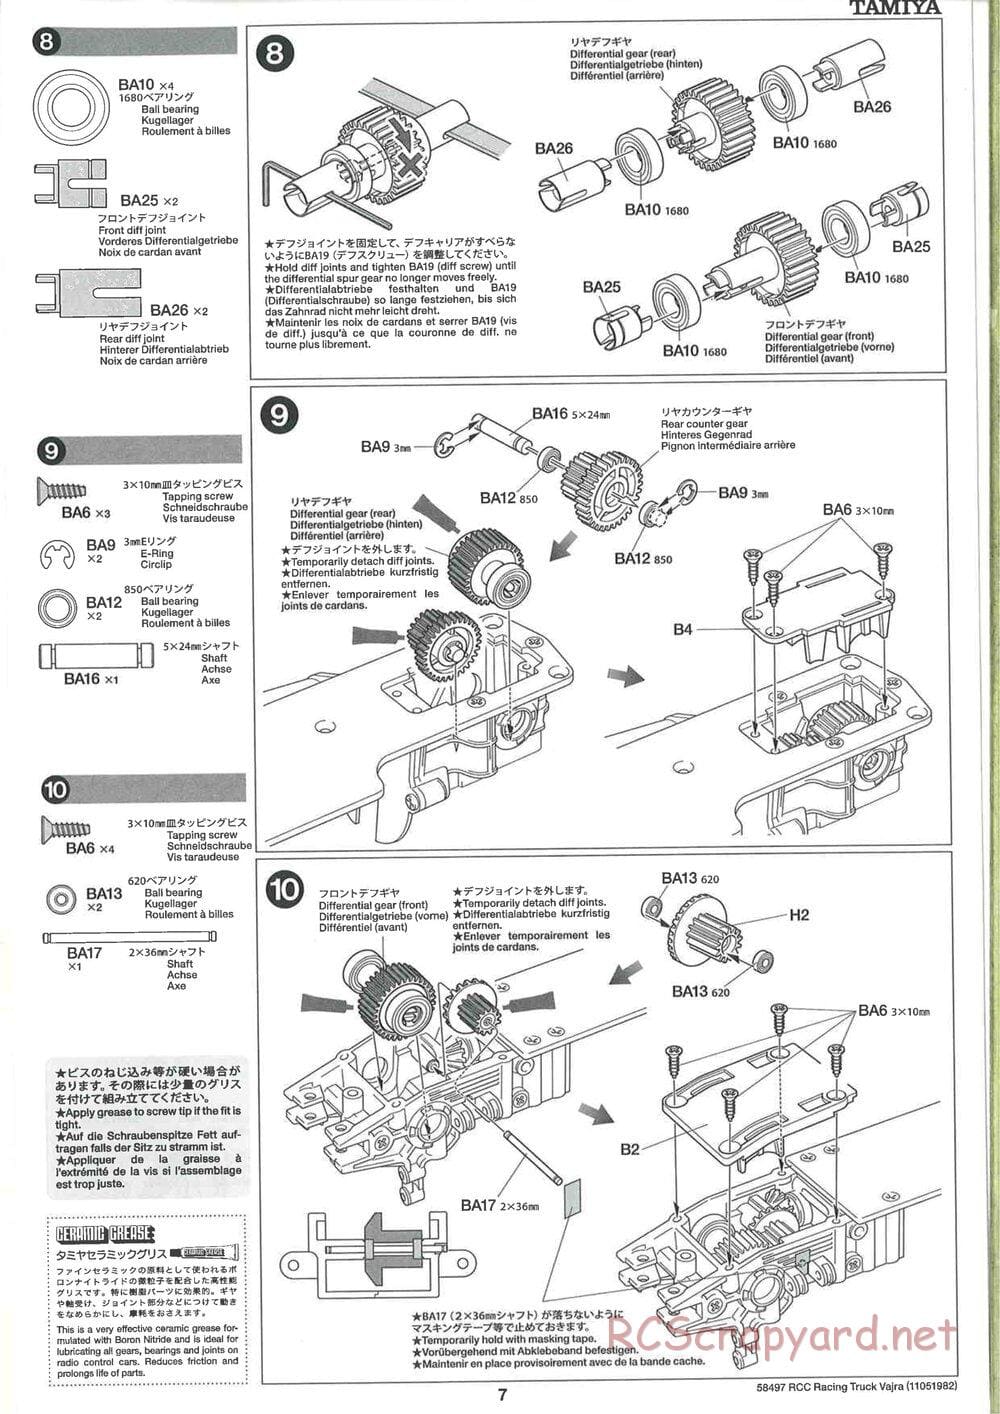 Tamiya - Vajra - AV Chassis - Manual - Page 7